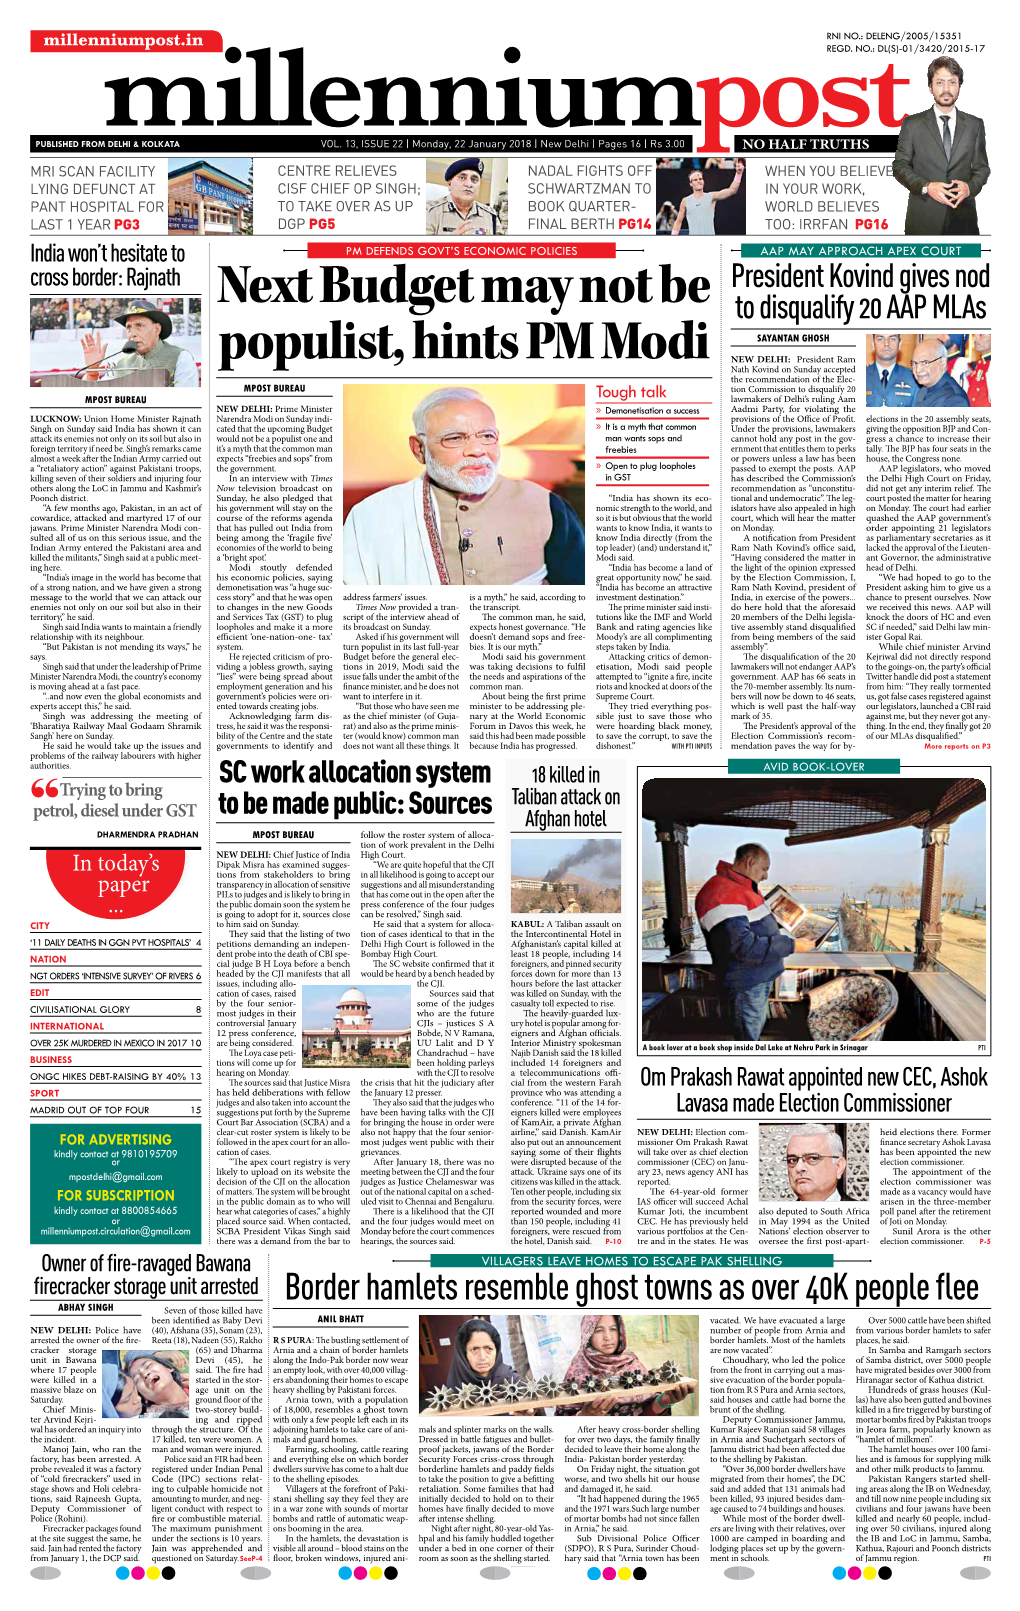 Next Budget May Not Be Populist, Hints PM Modi